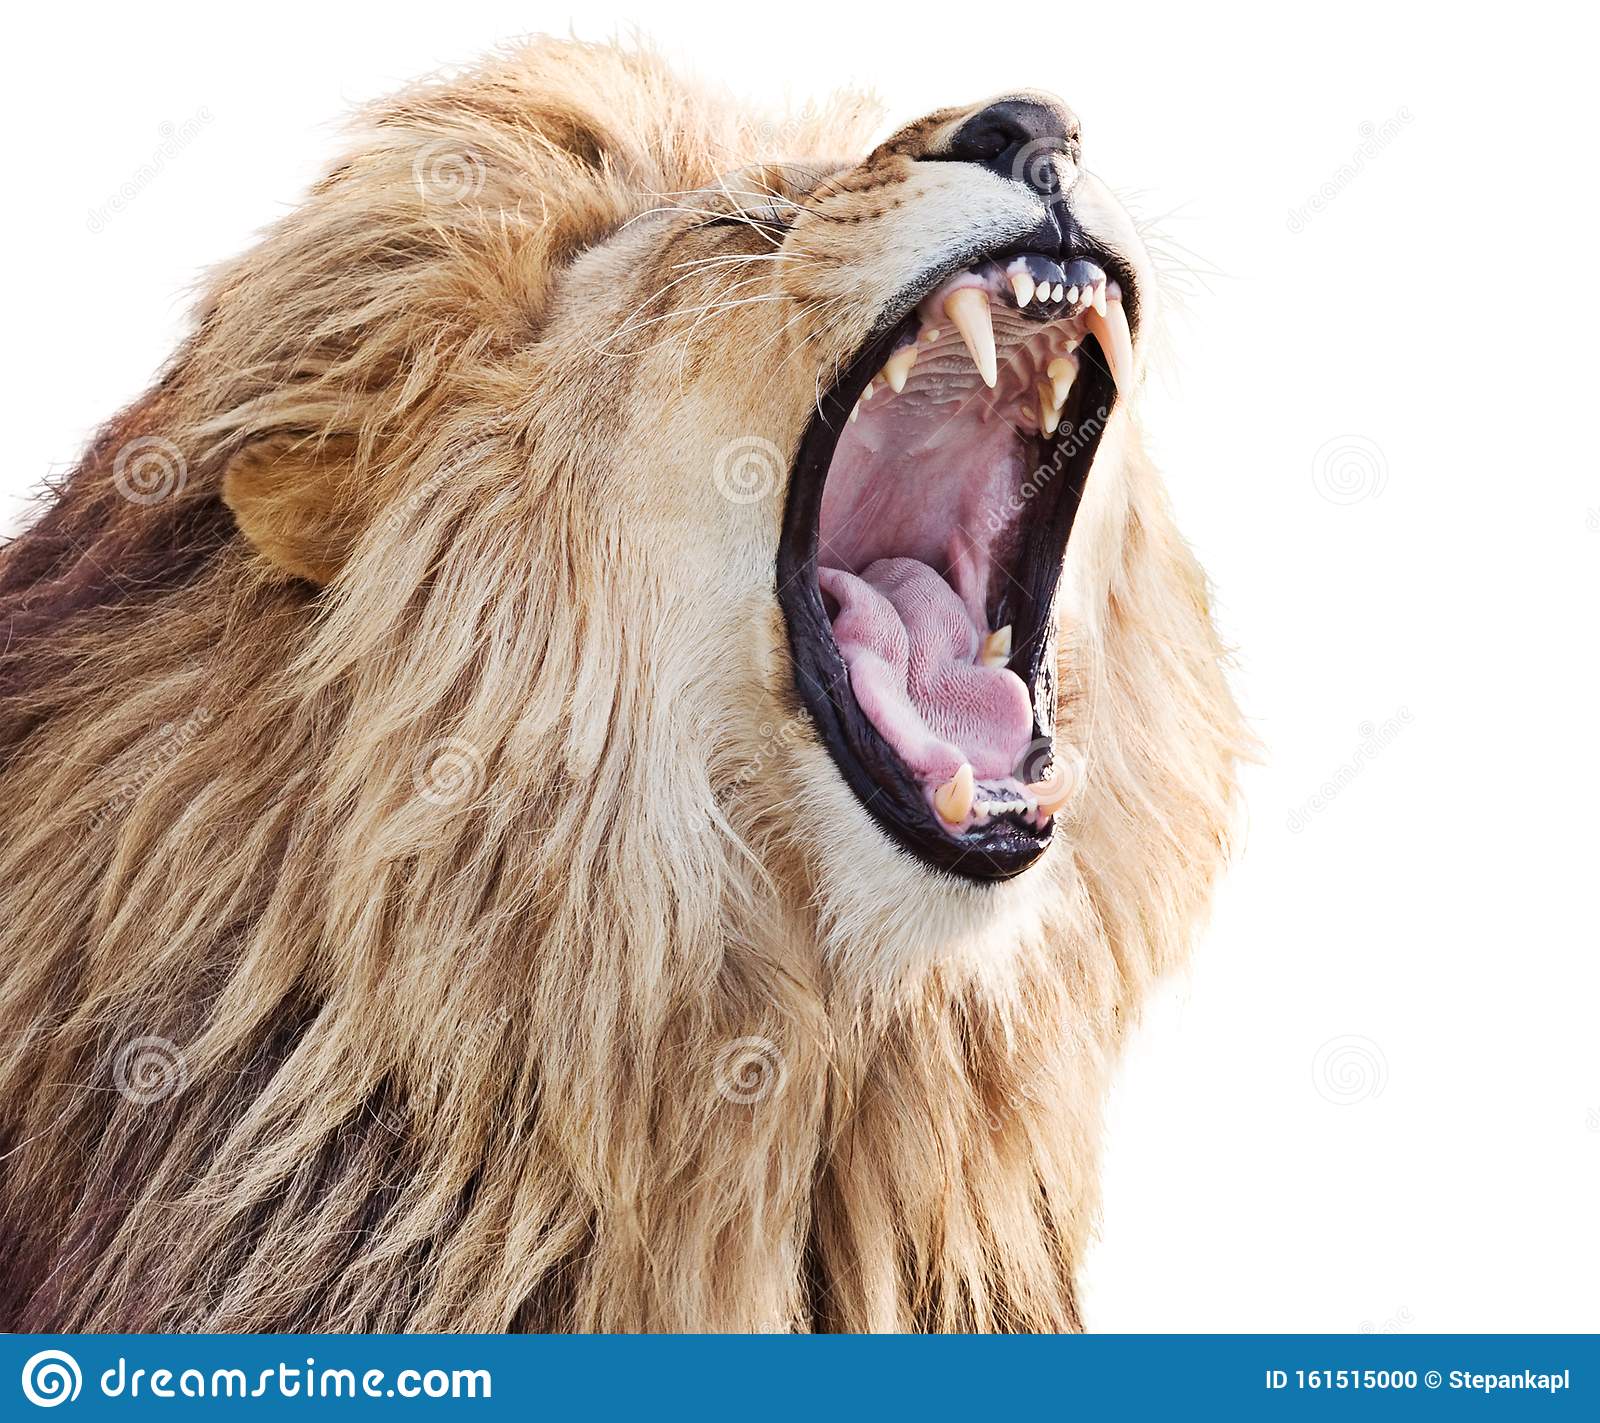 roaring lion freepik